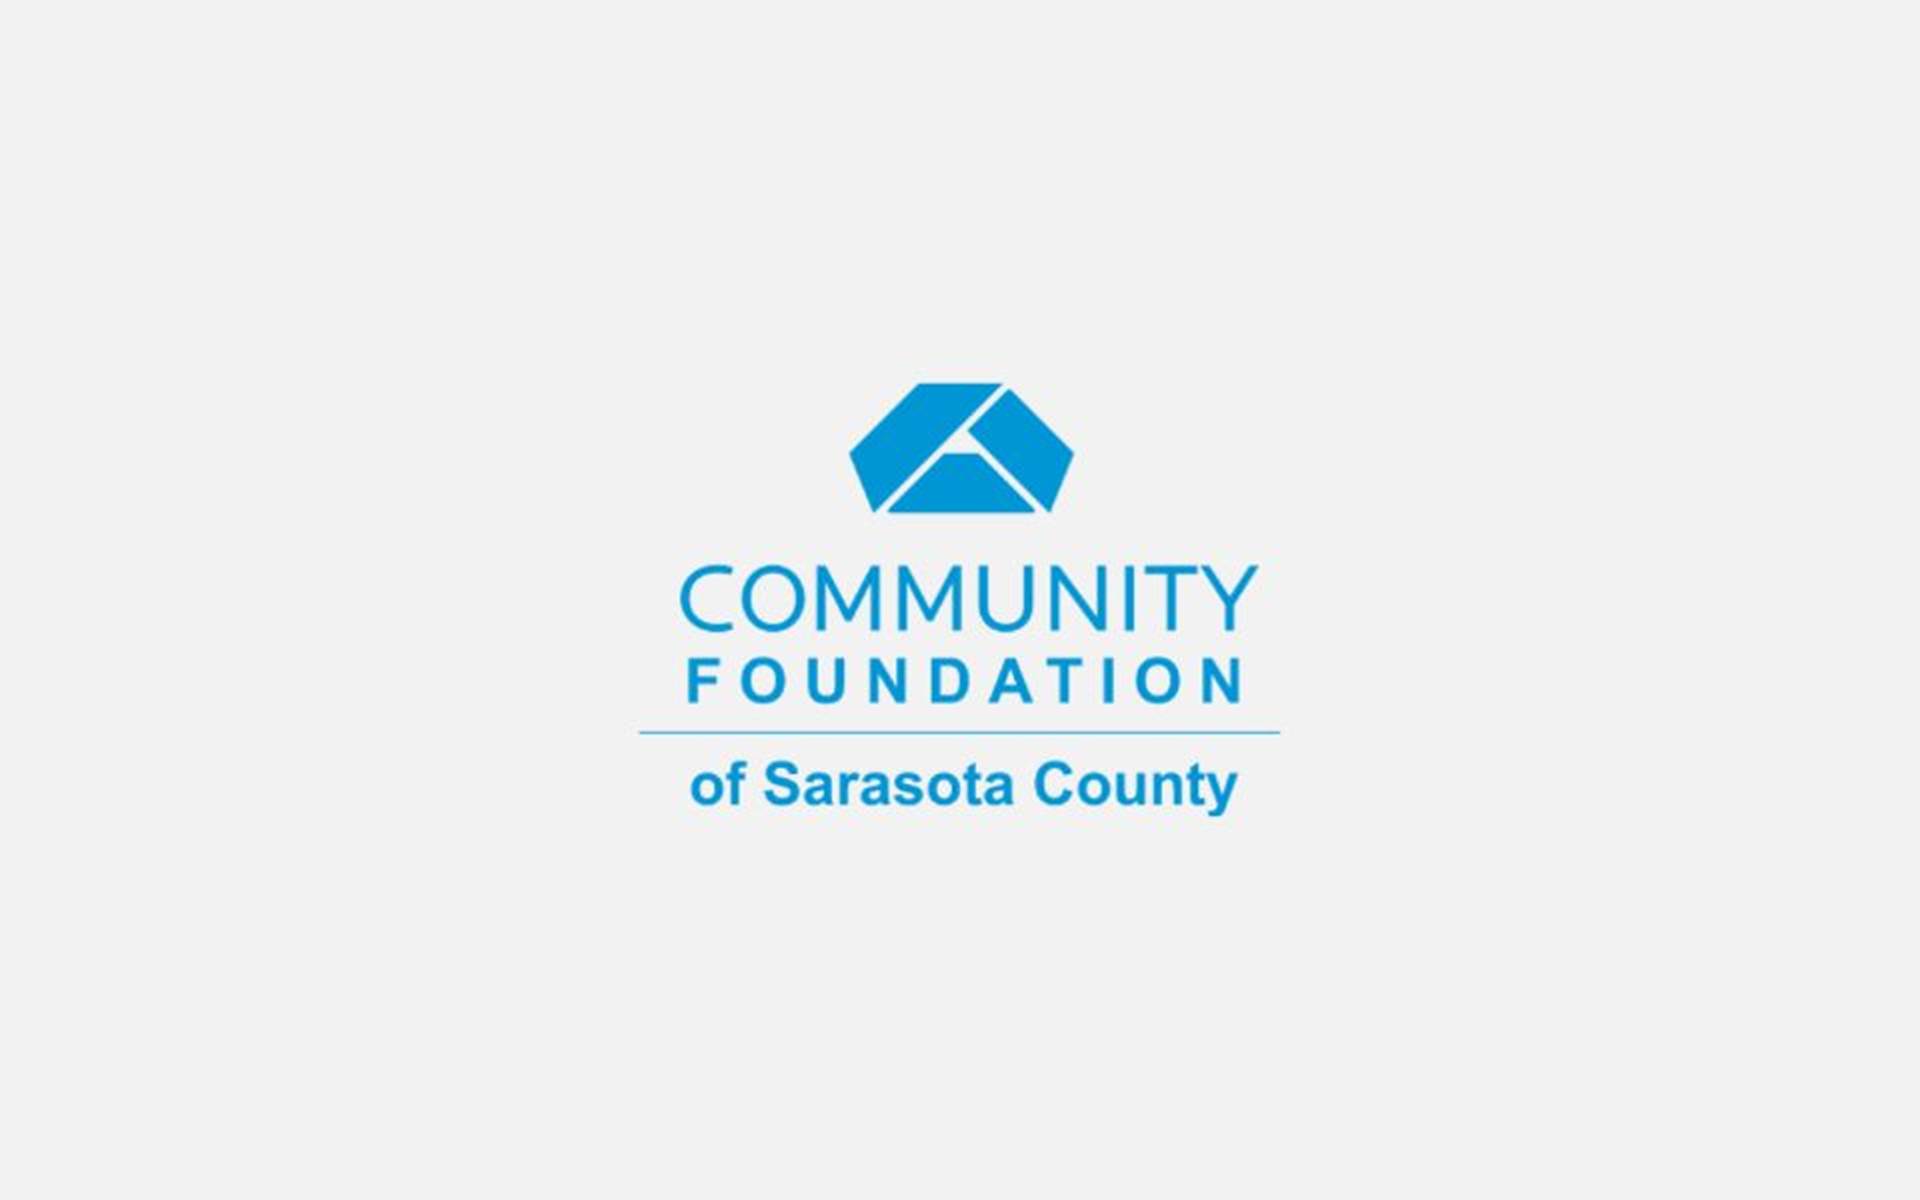 Community foundation of Sarasota County